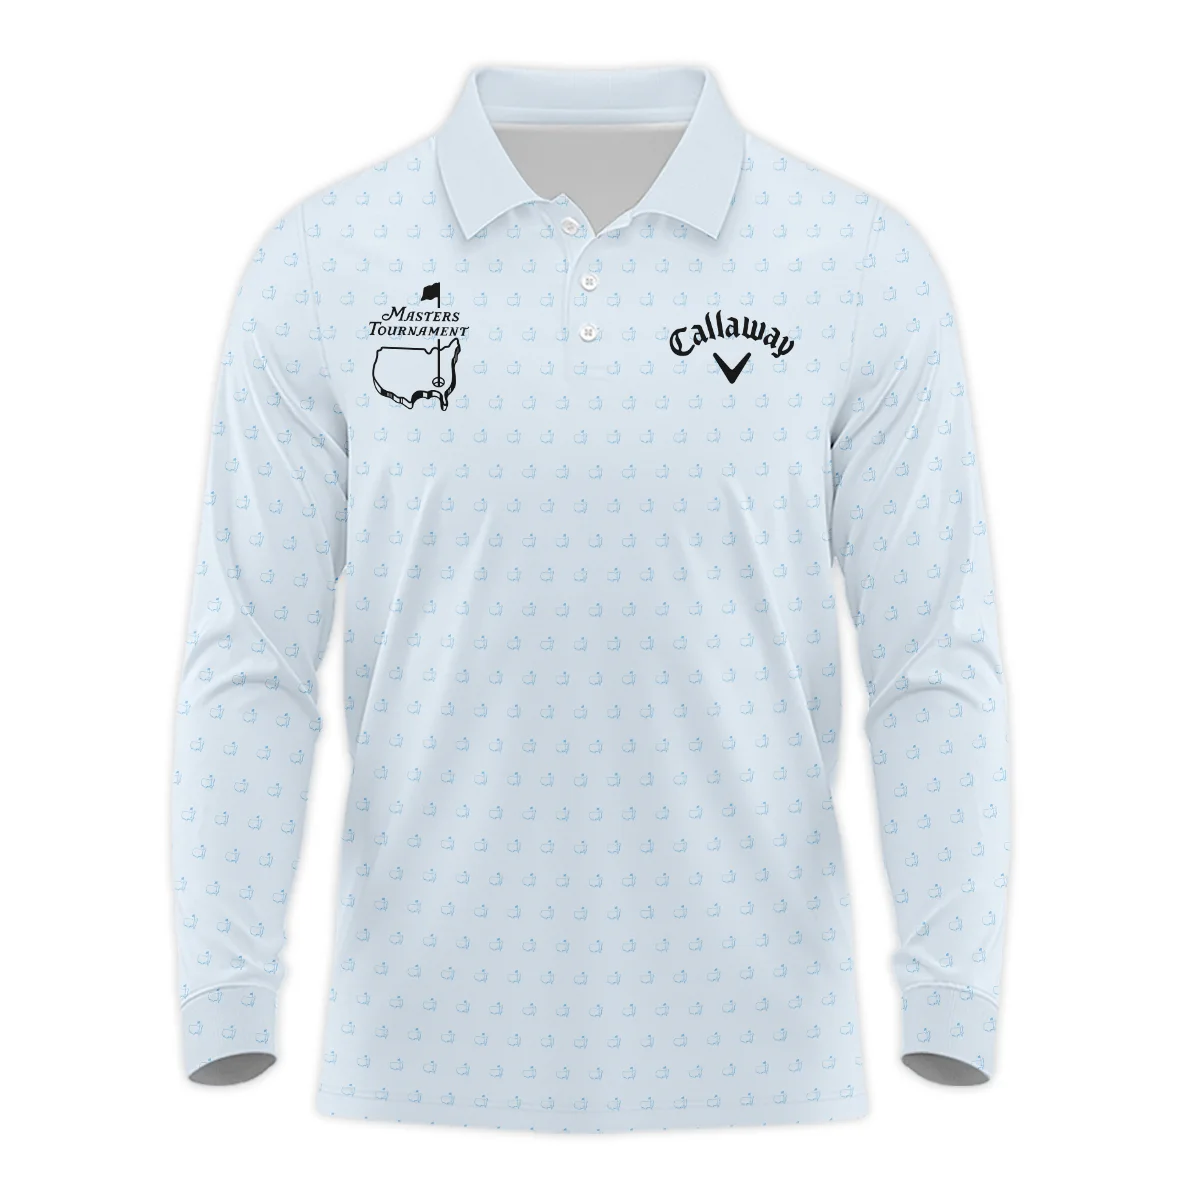 Pattern Masters Tournament Callaway Polo Shirt White Light Blue Color Pattern Logo  Polo Shirt For Men